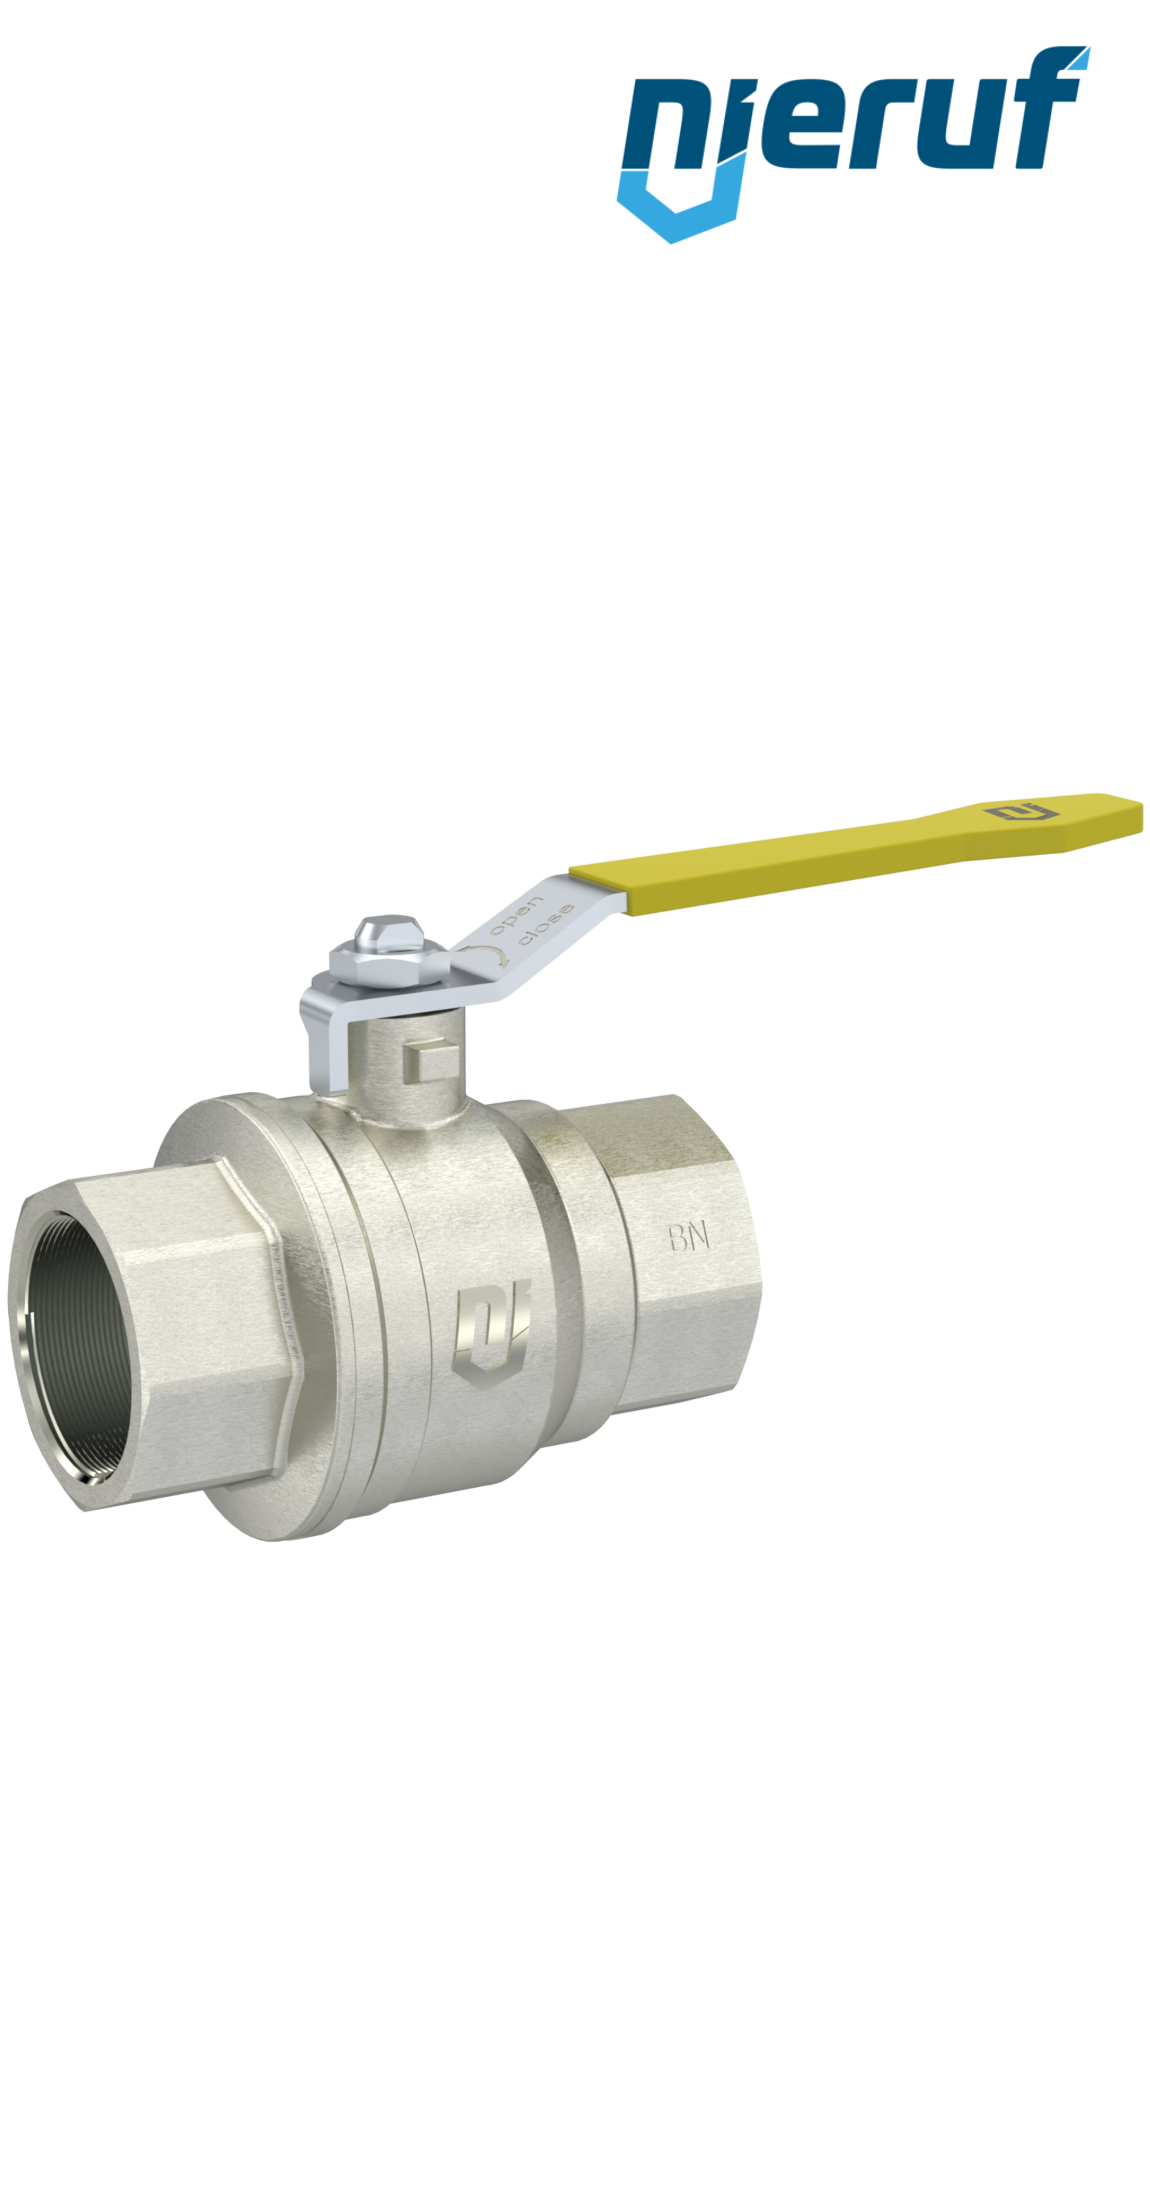 brass ball valve for gas DN40 - 1 1/2" inch GK14 female thread